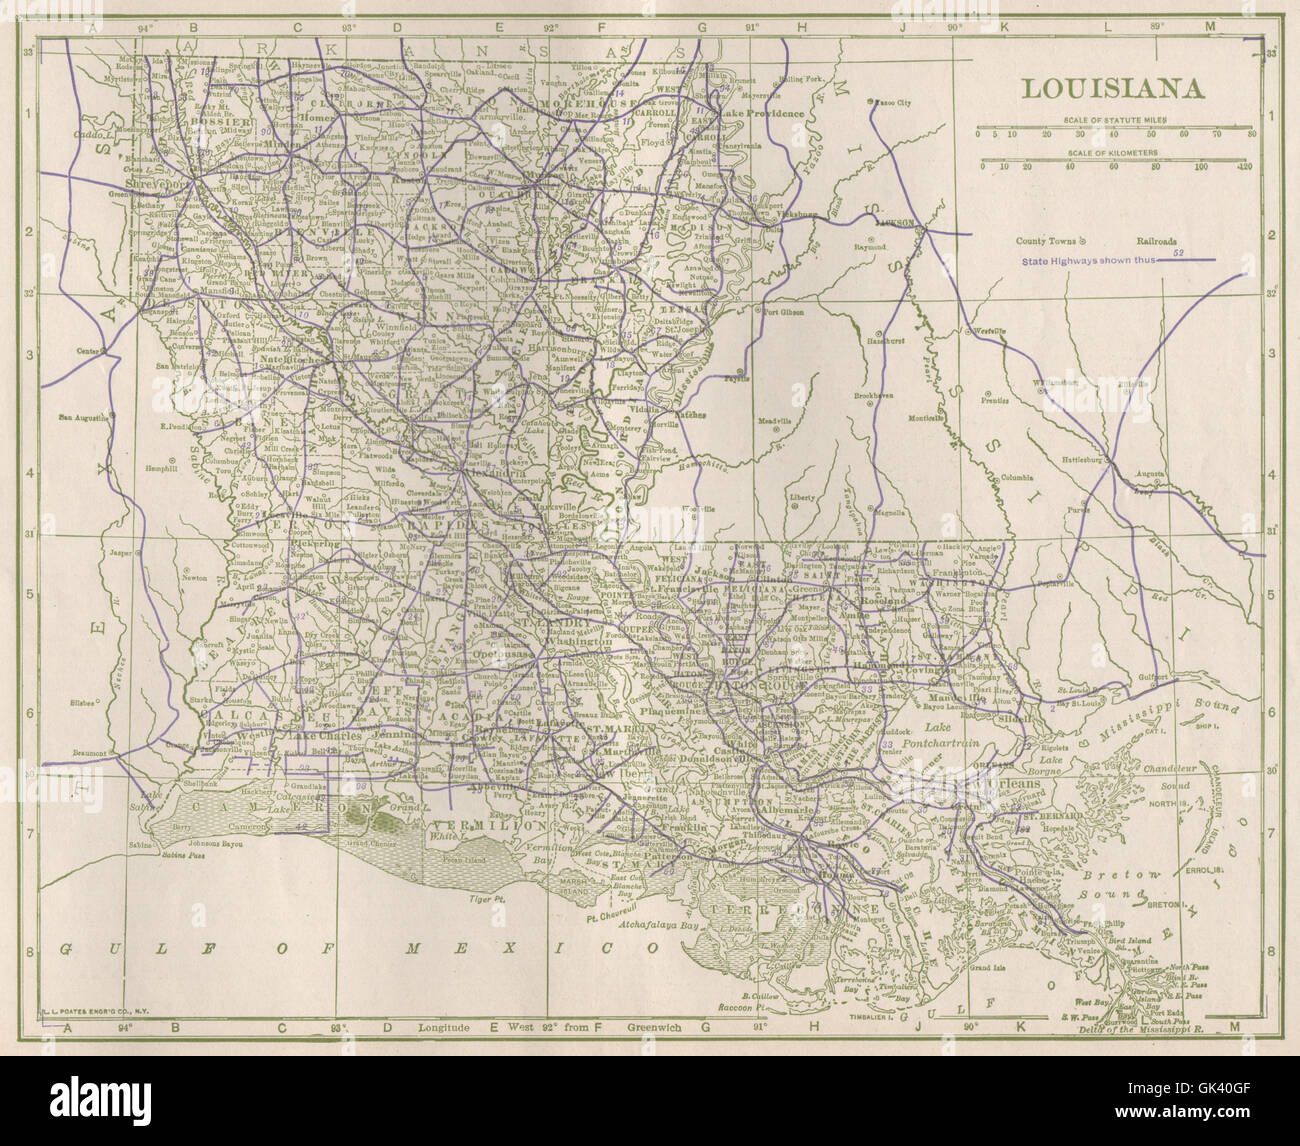 Louisiana State Highways Poates 1925 Vintage Map Stock Photo Alamy